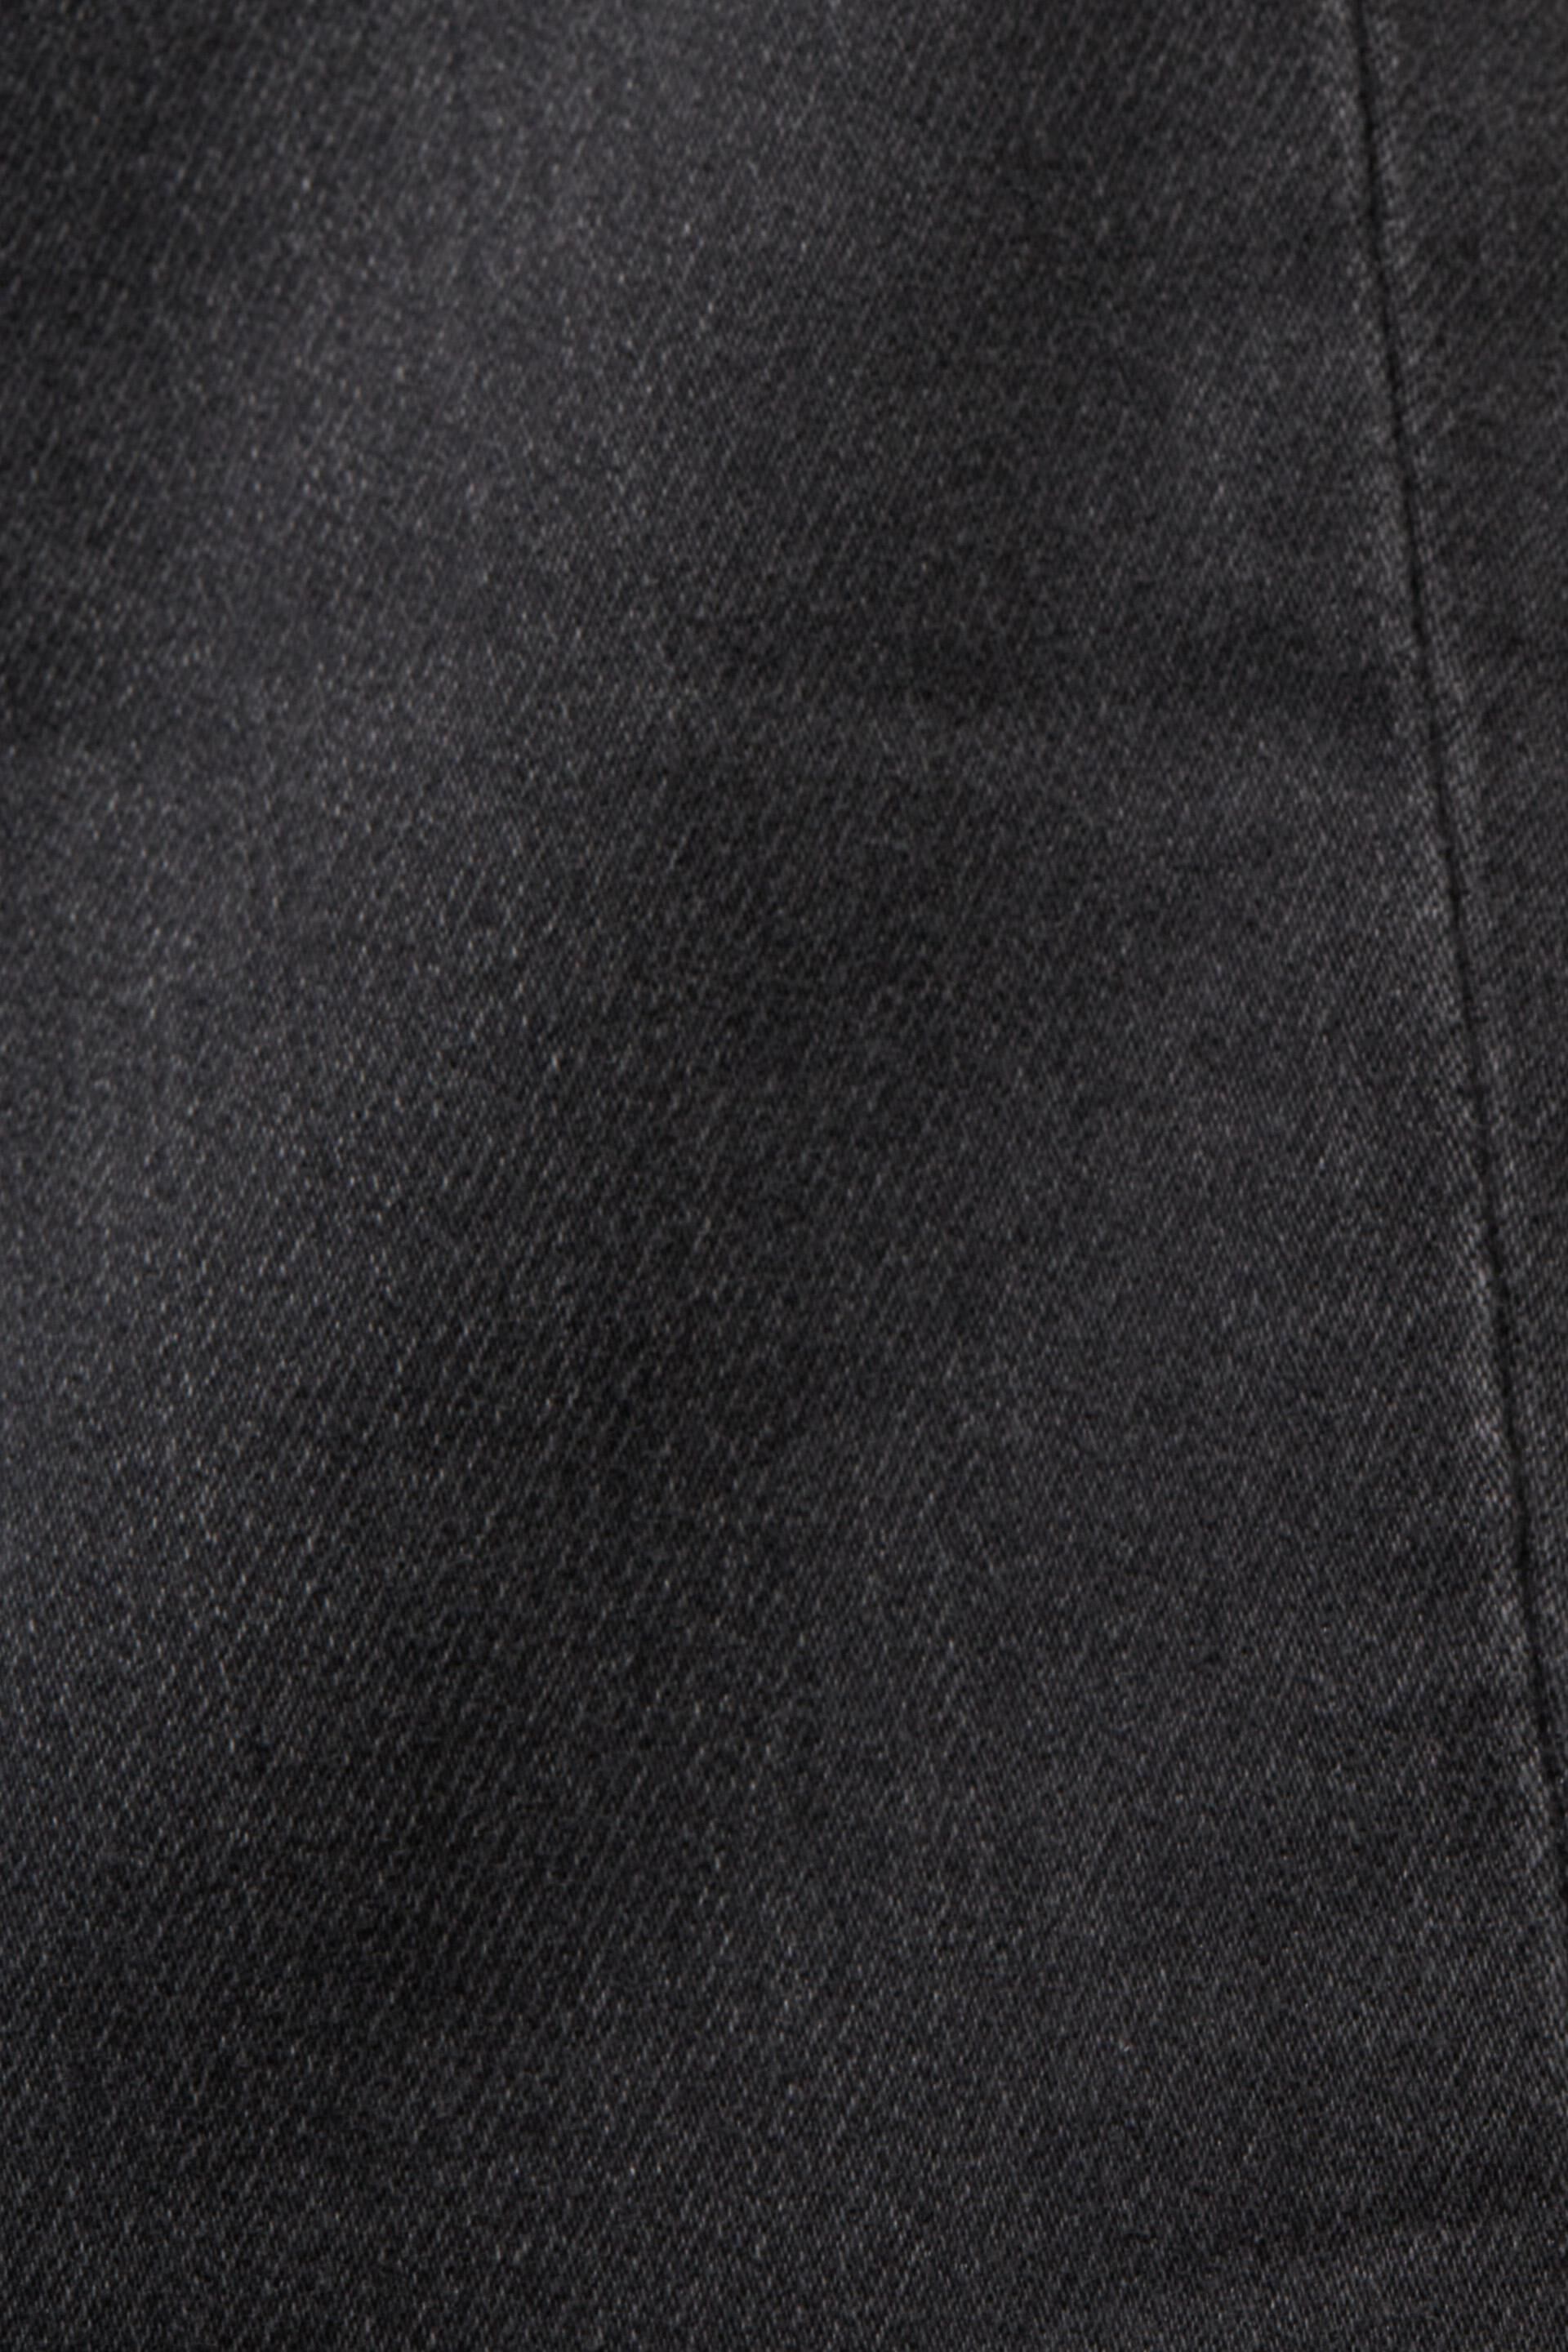 Buy Grey Stretch Denim Fabric | Higgs and Higgs UK